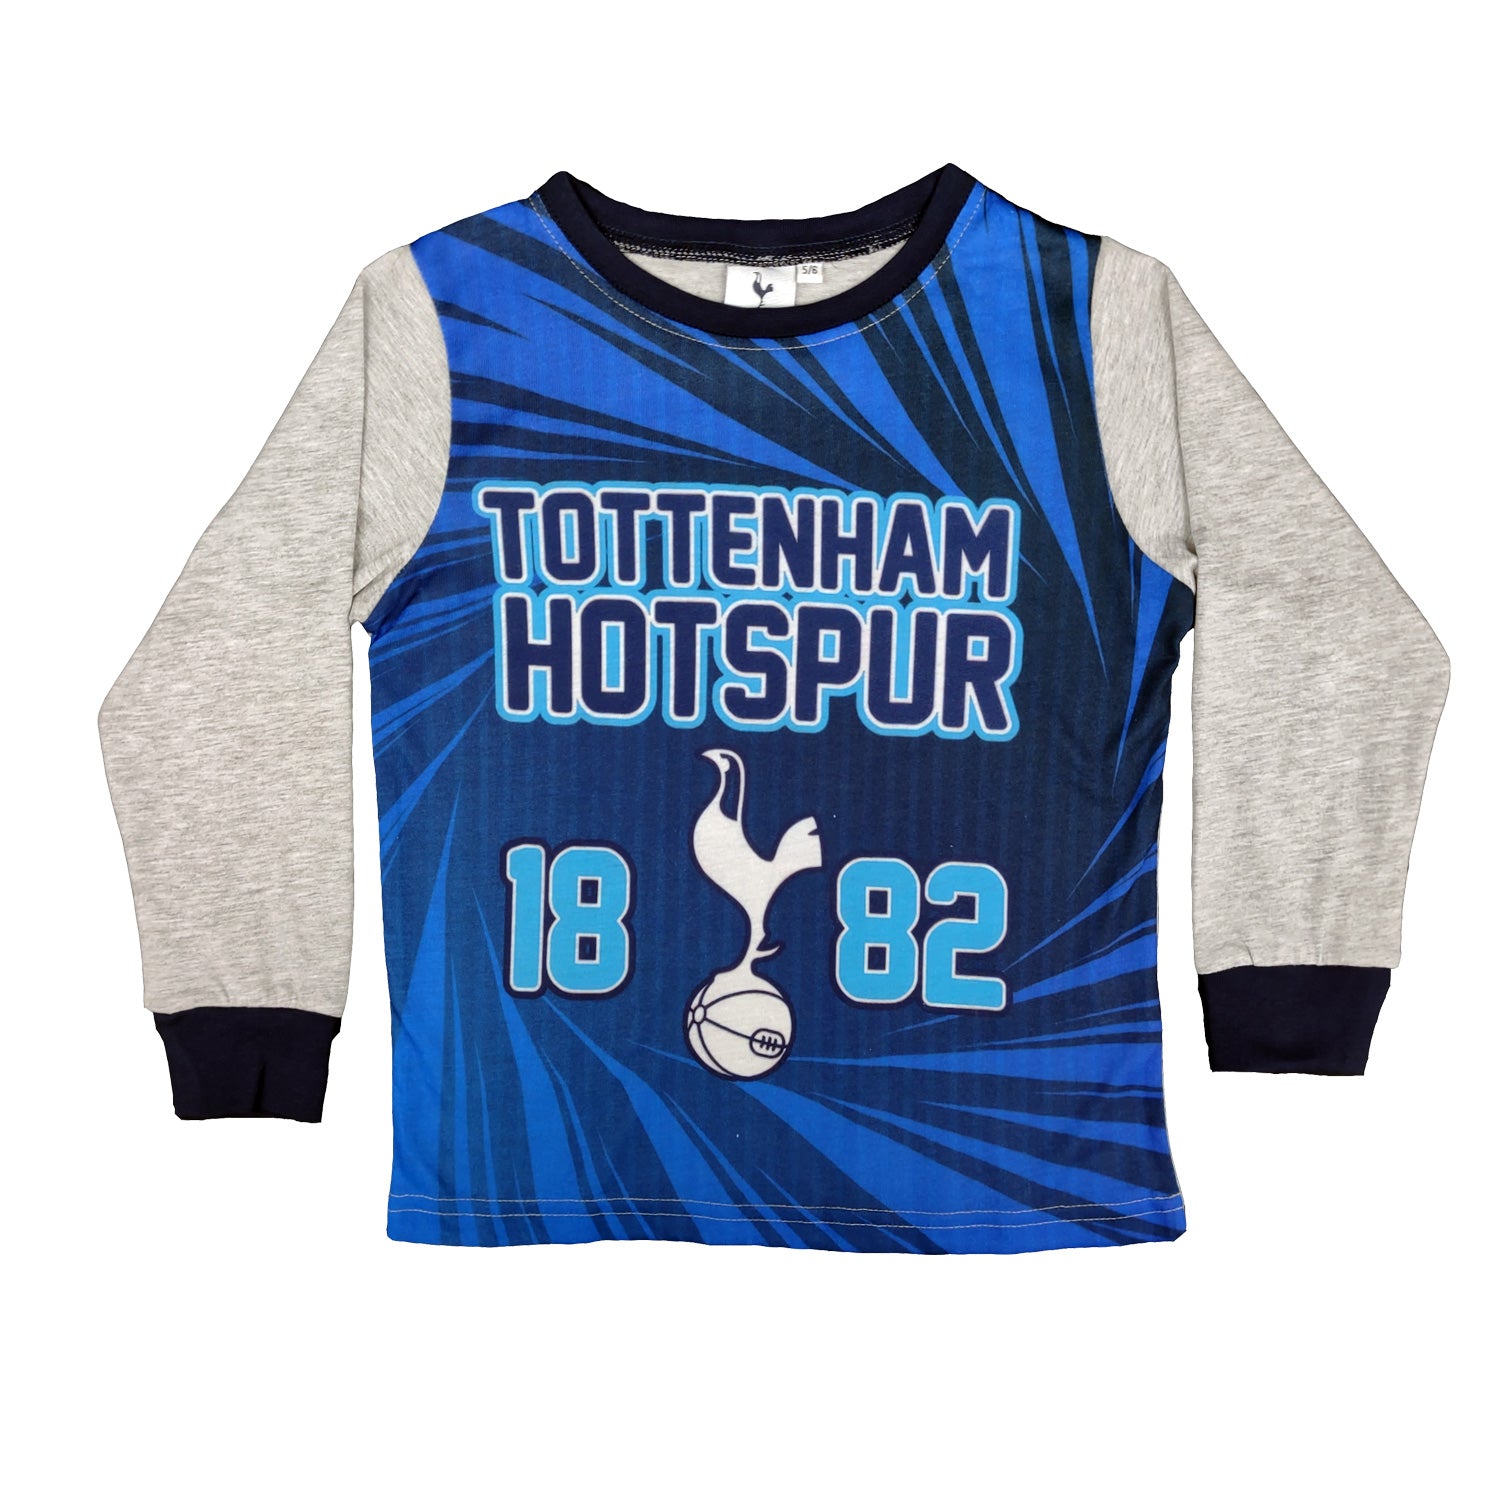 Kids Tottenham Hotspur Long Sleeve Pyjamas Set Top